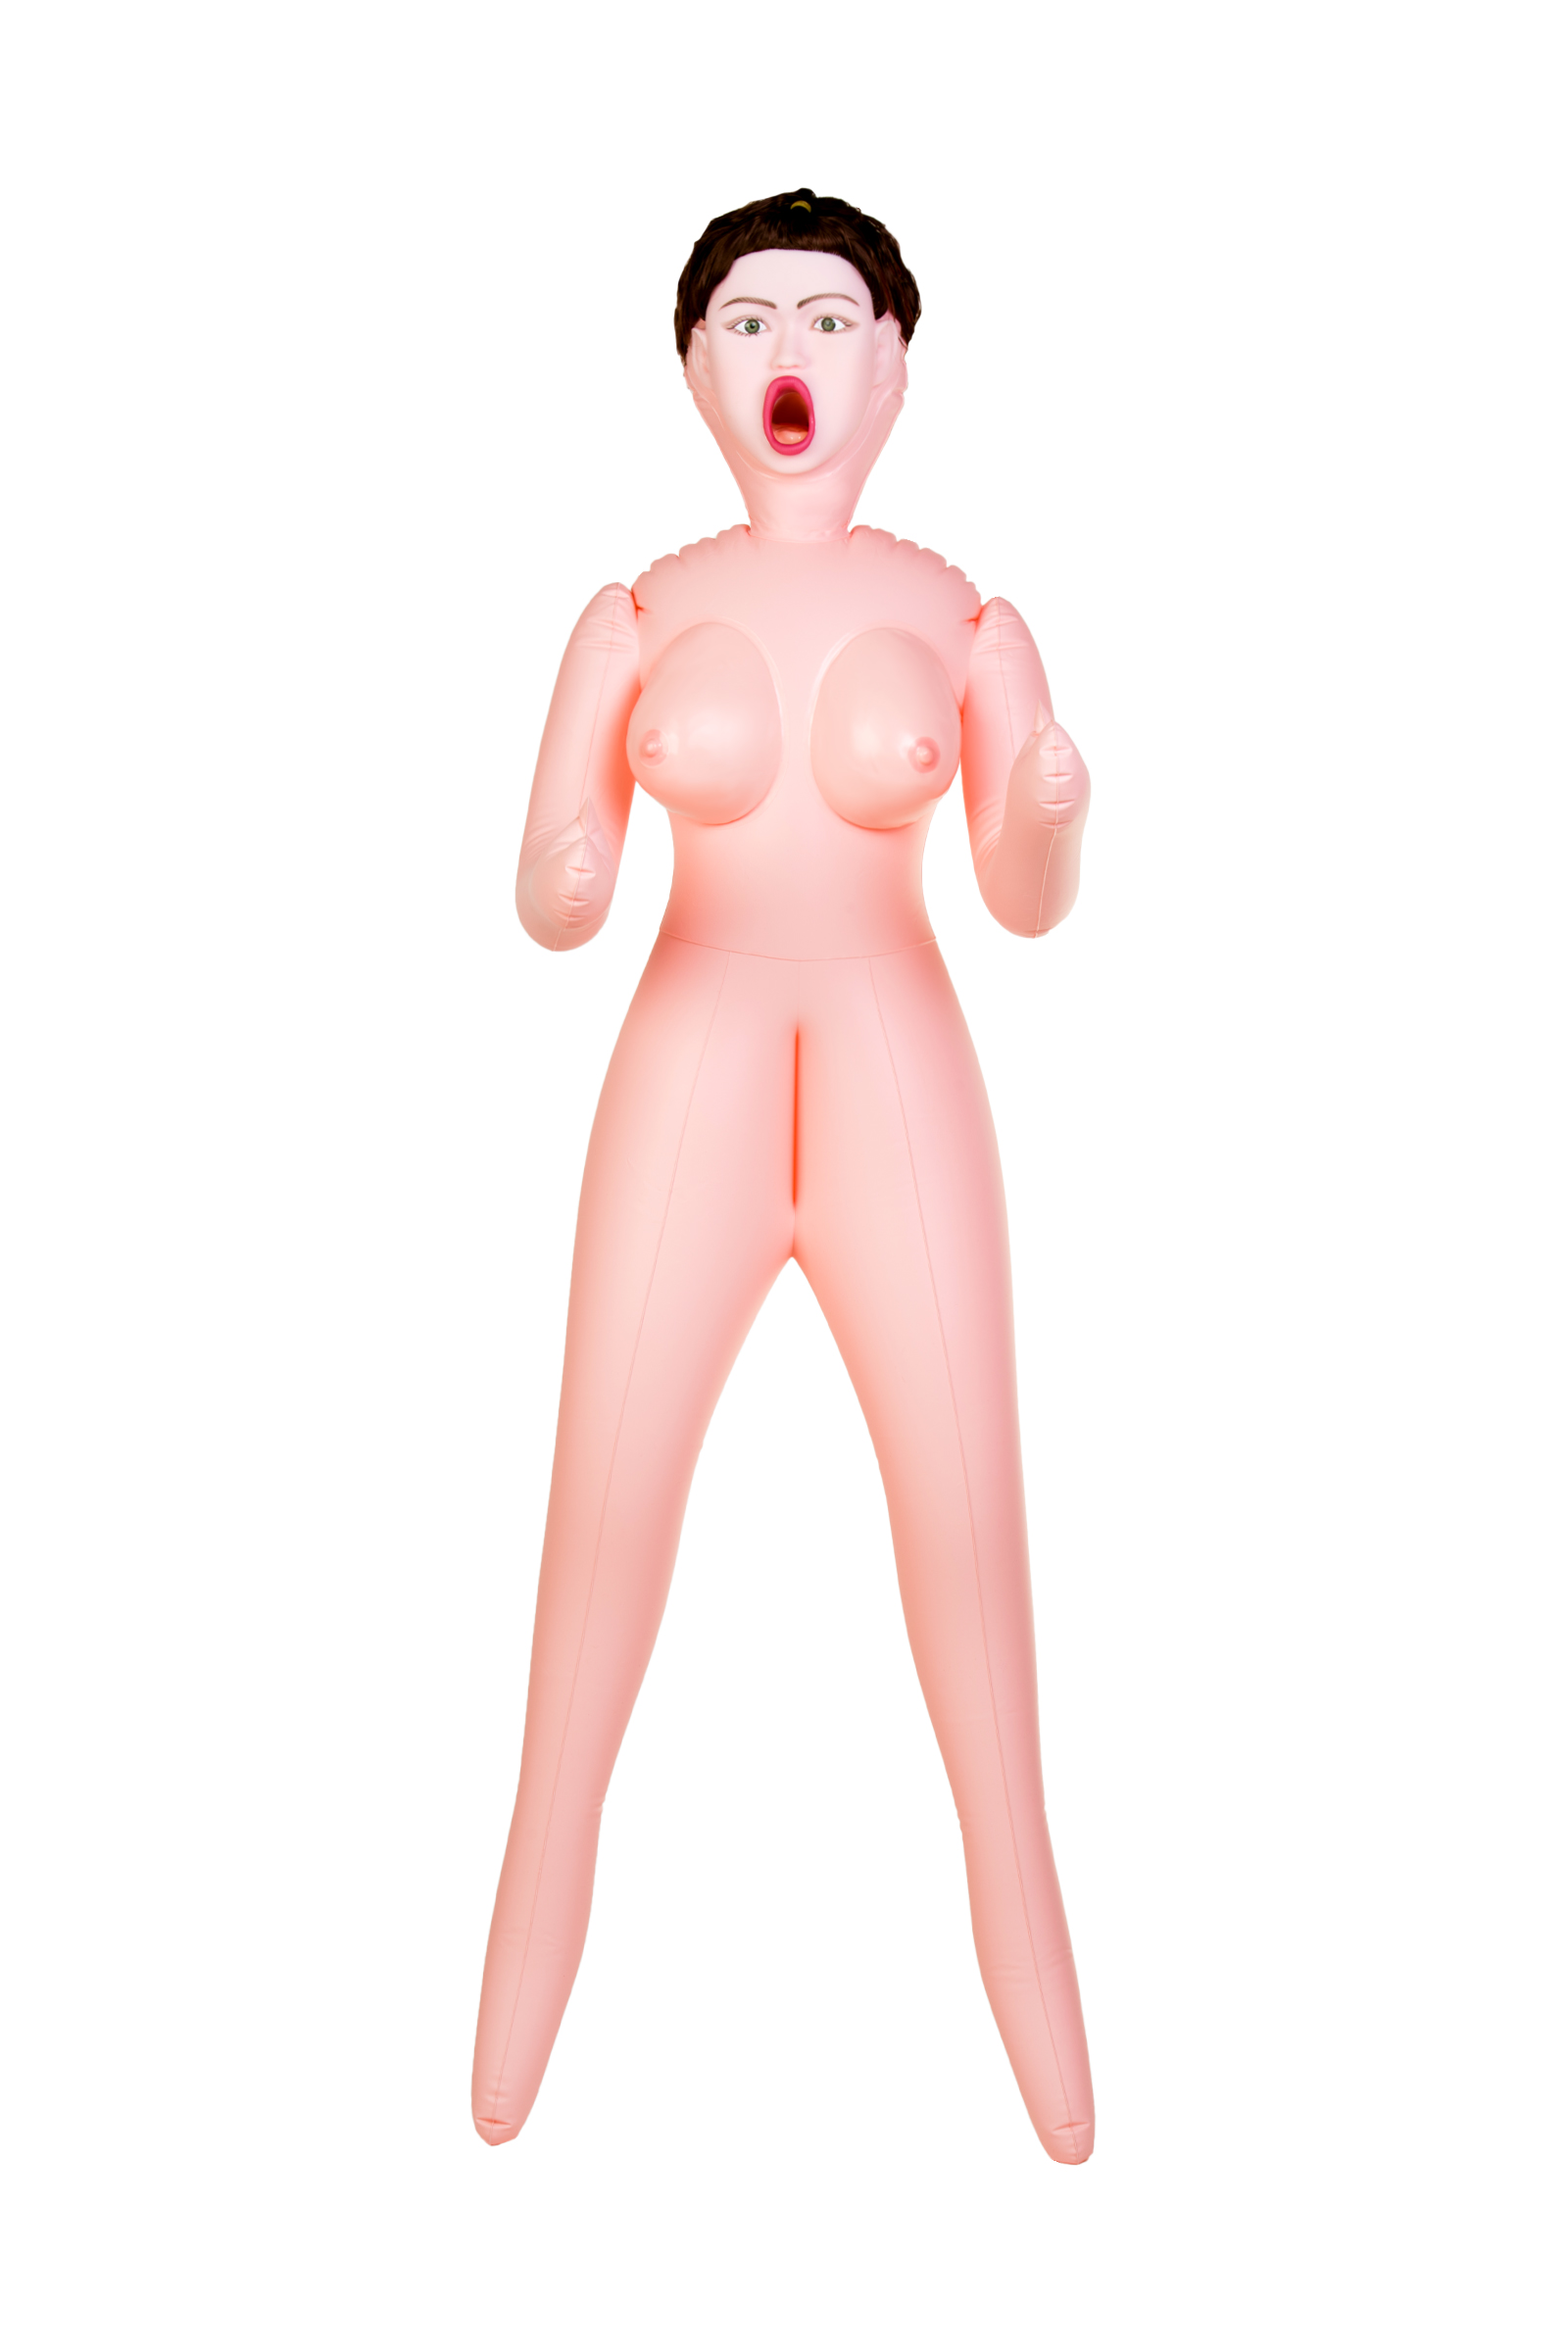 Кукла надувная Dolls-X by TOYFA Violet, брюнетка, с тремя отверстиями, кибер вставка: вагина. Фото N2